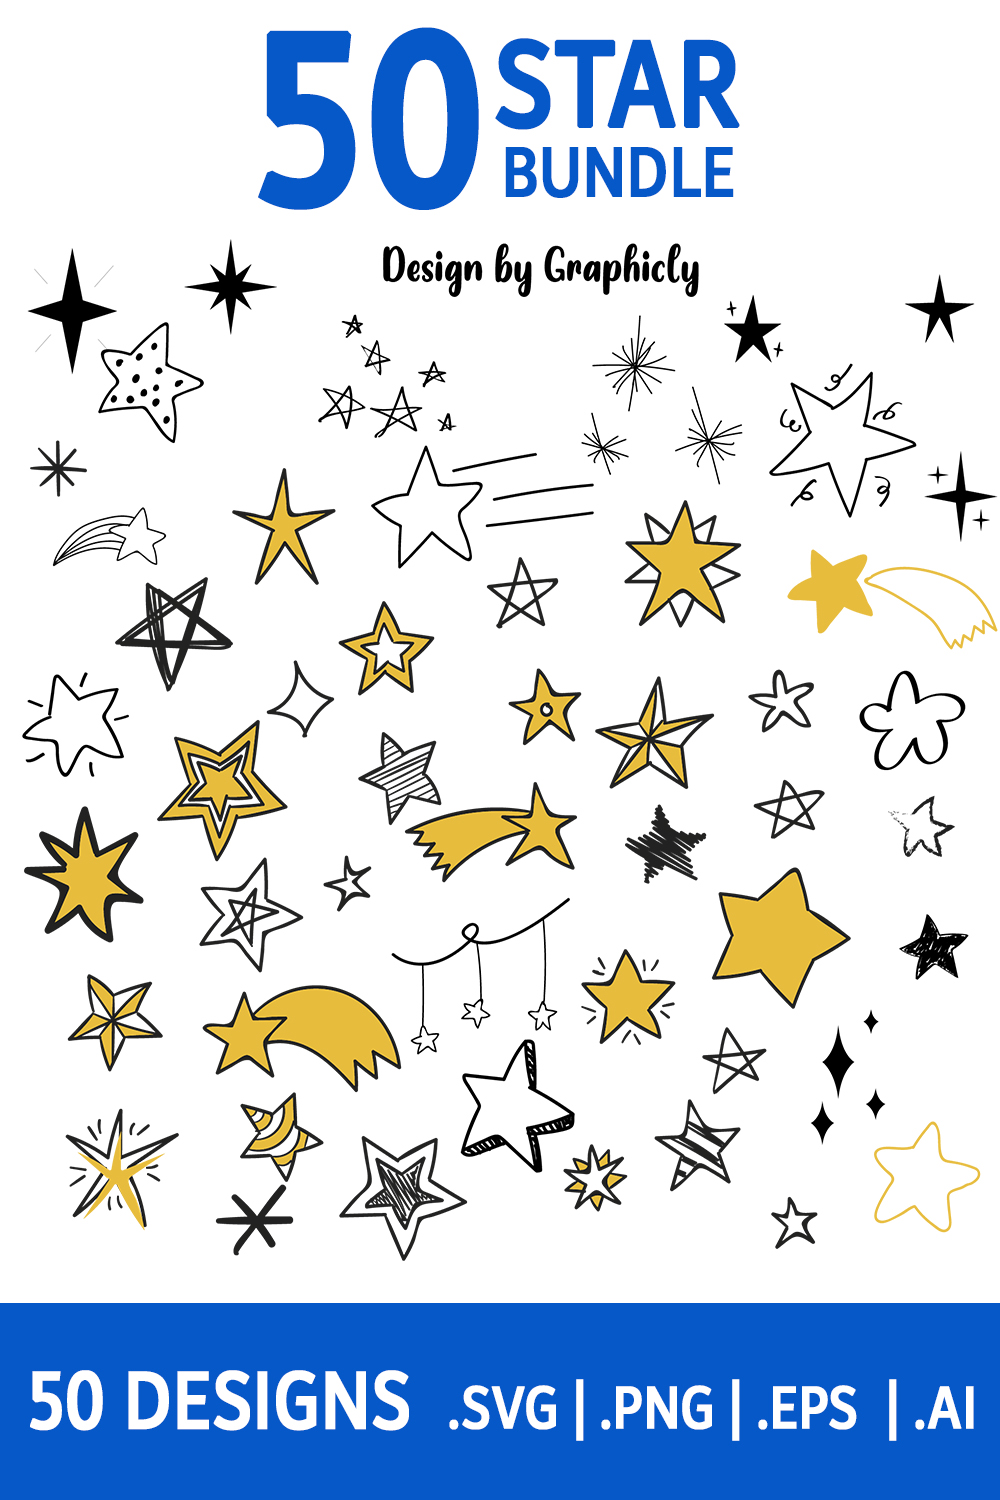 50 stars bundle pin graphilcy design copy